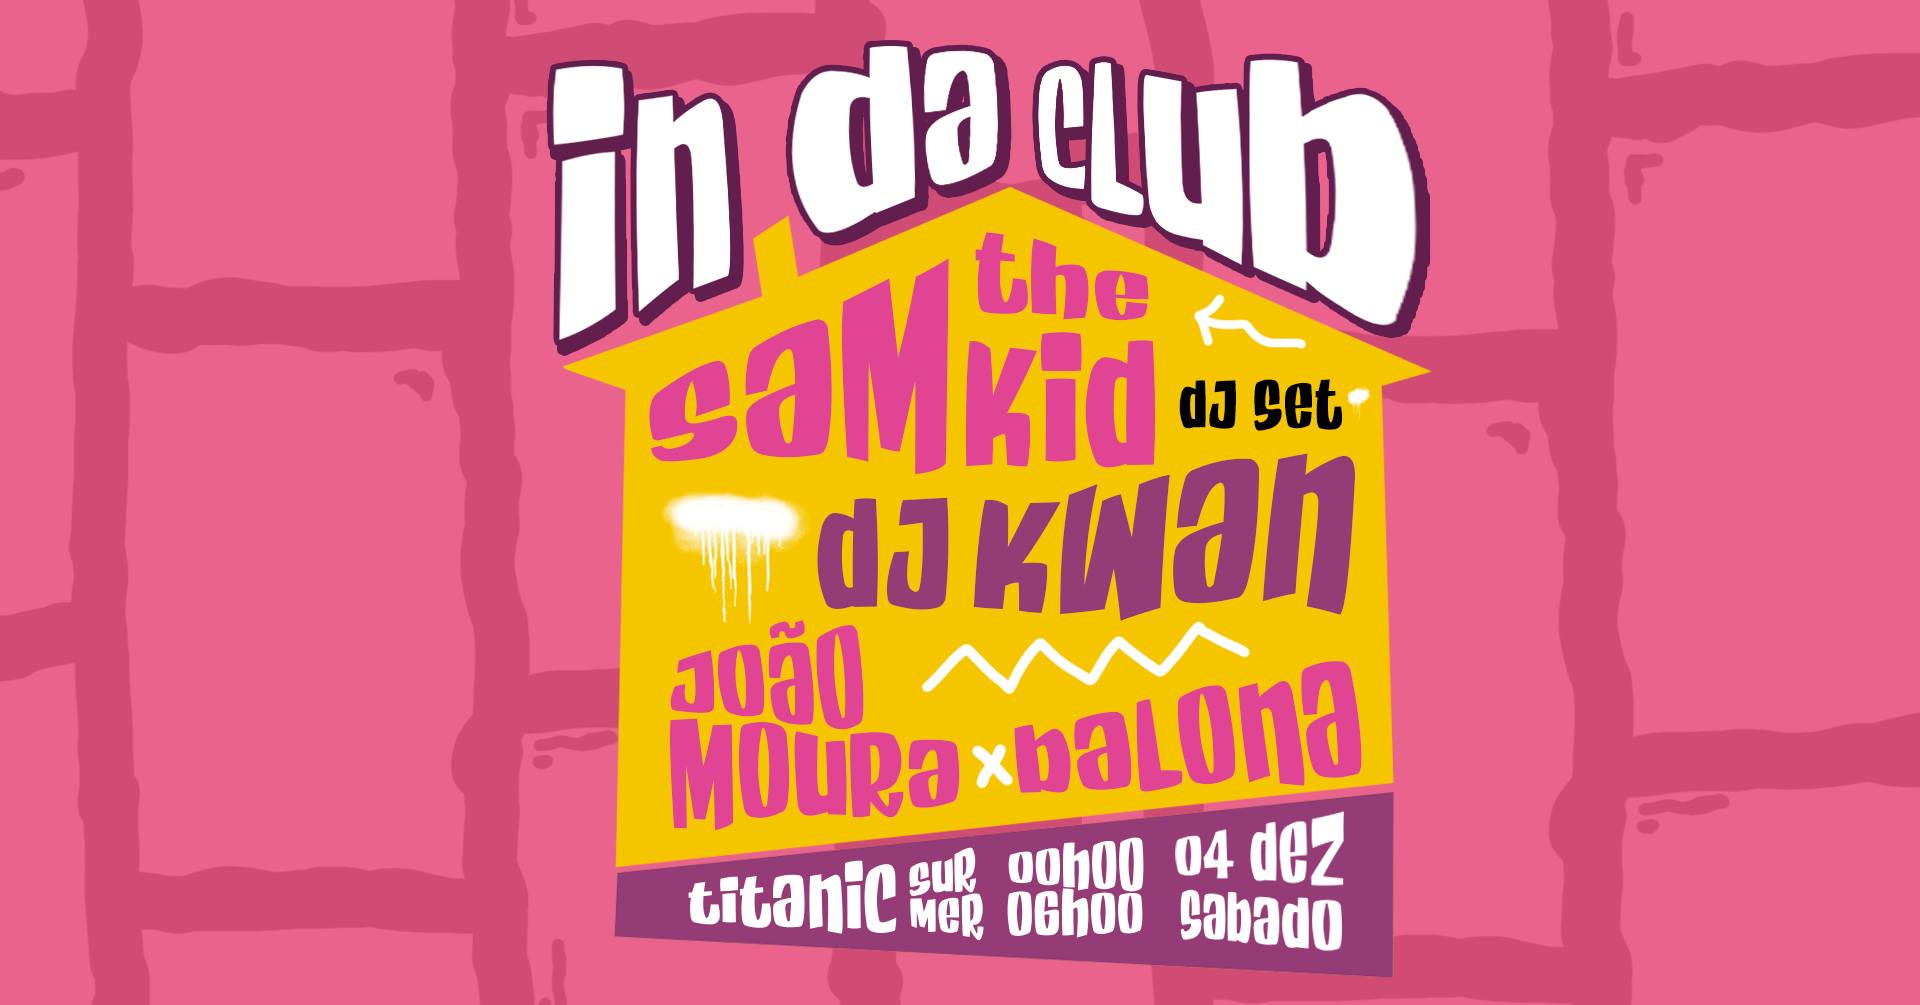 IN DA CLUB: Sam The Kid (DJ Set) + DJ Kwan and more